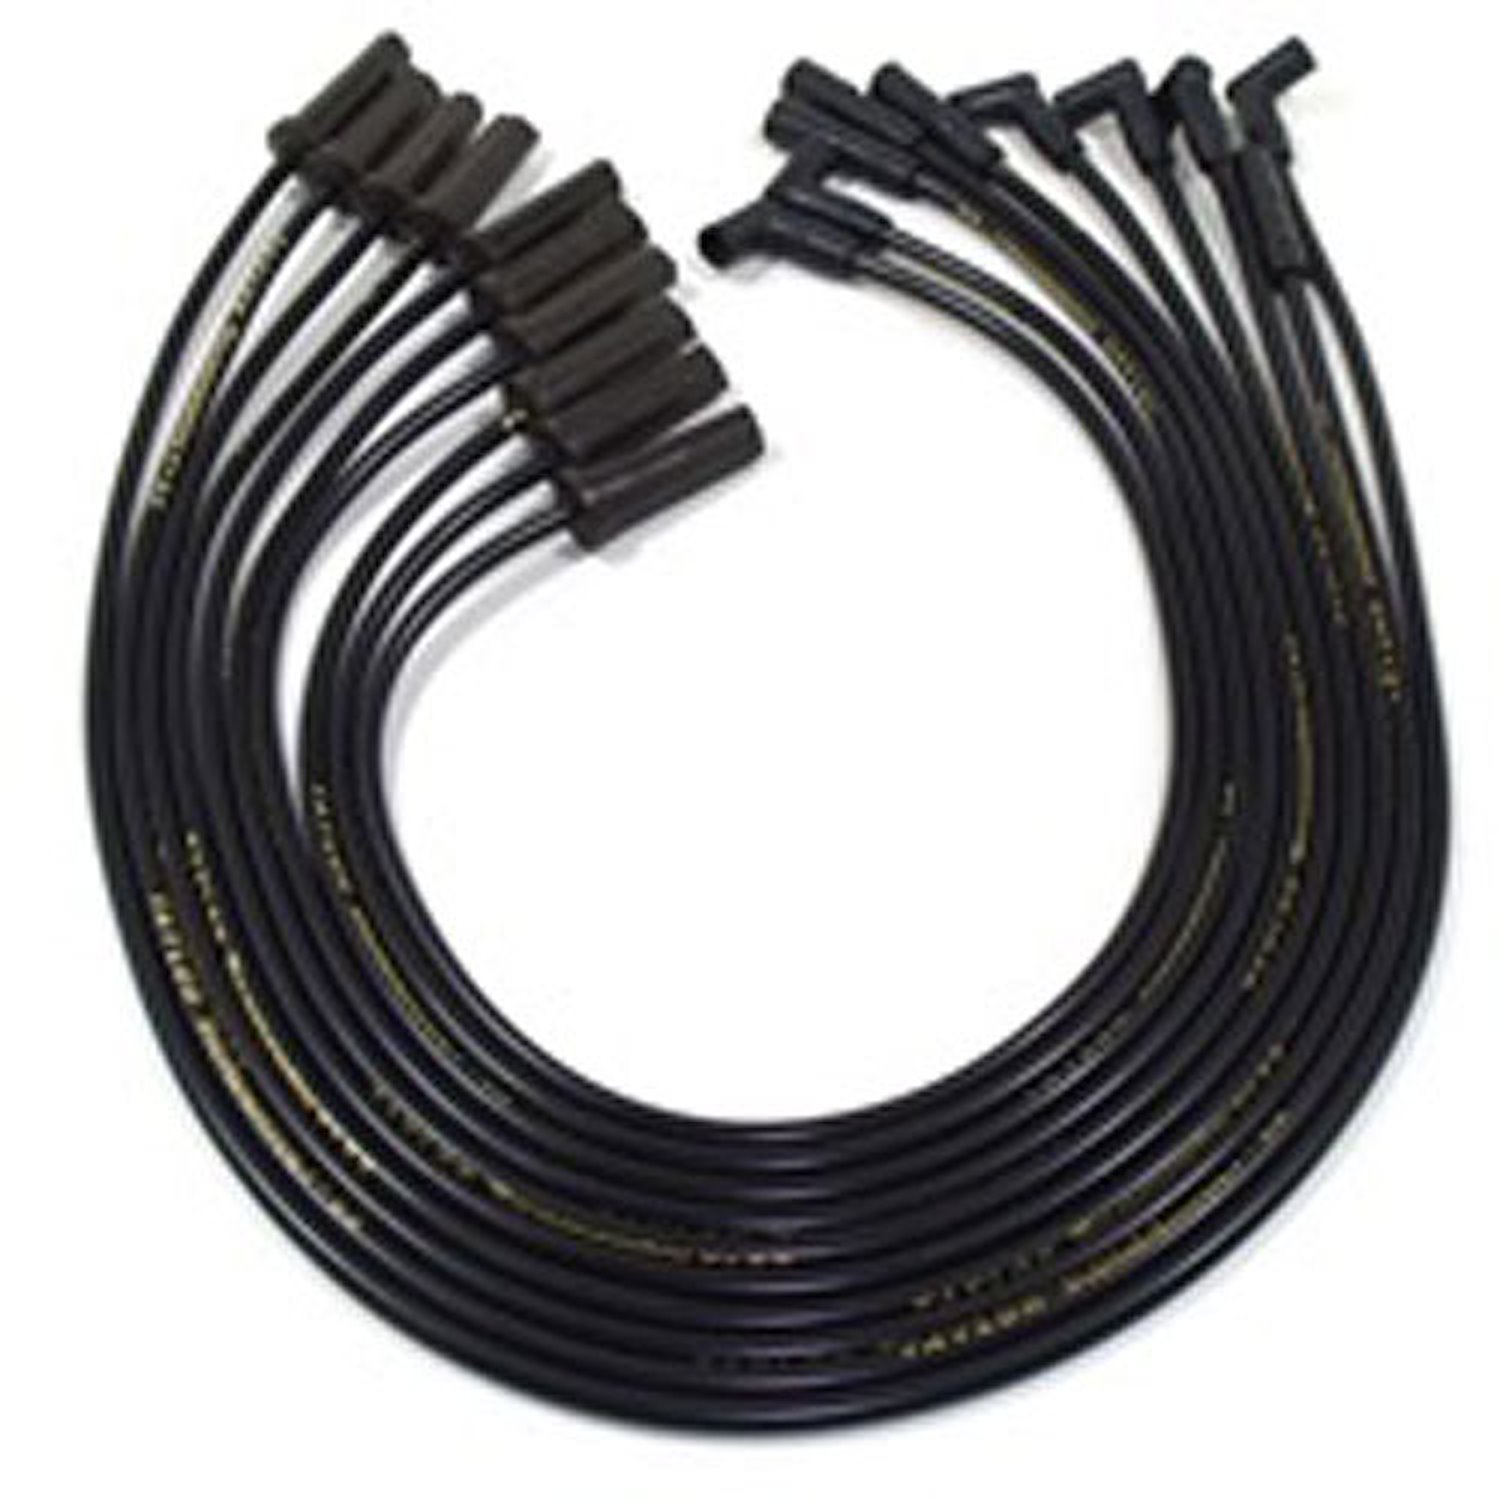 ThunderVolt 8.2mm 40 ohm Ferrite Core Performance Ignition Wire Set Custom Fit Black